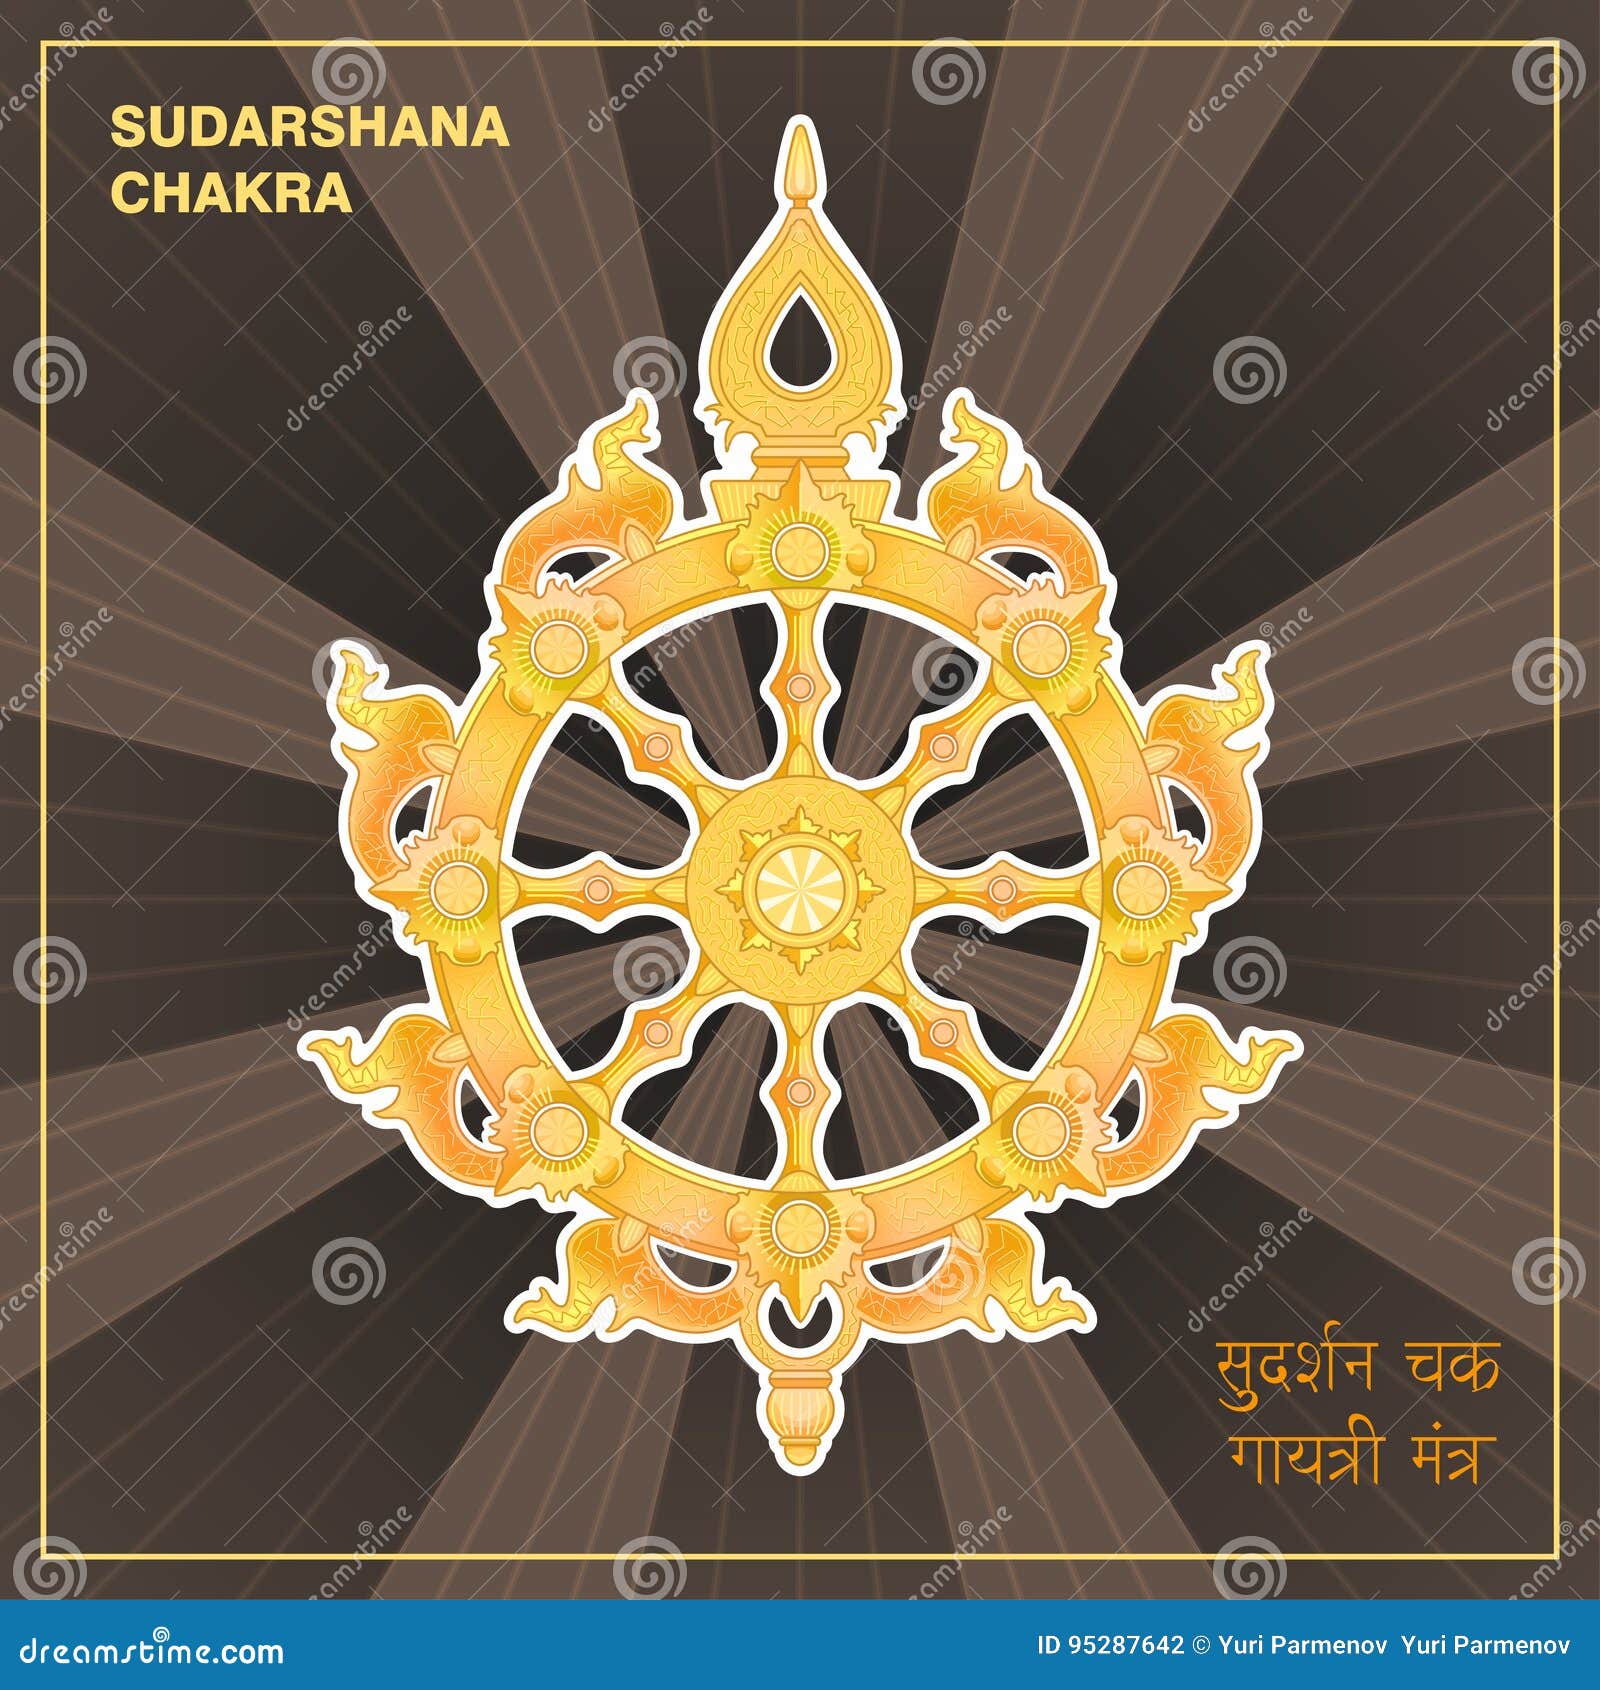 sudarshana chakra fiery disc attribute weapon lord krishna religious symbol hinduism vector illustration sudarshan decal 95287642